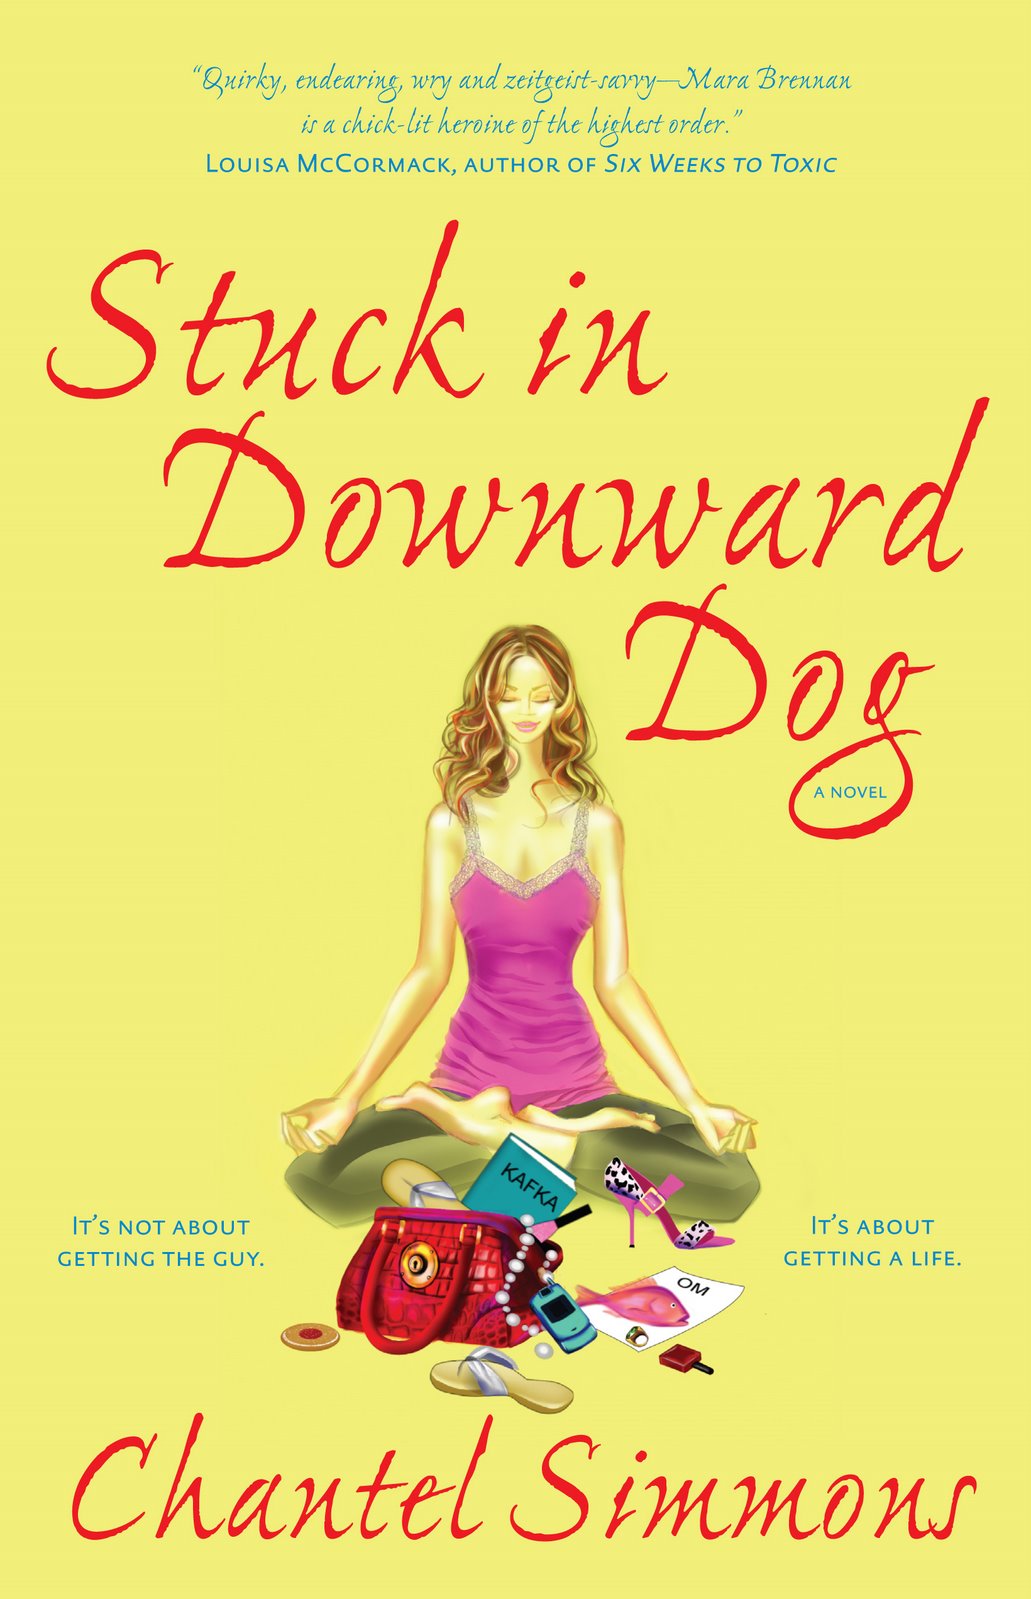 [Stuck+in+Downward+Dog.jpg]